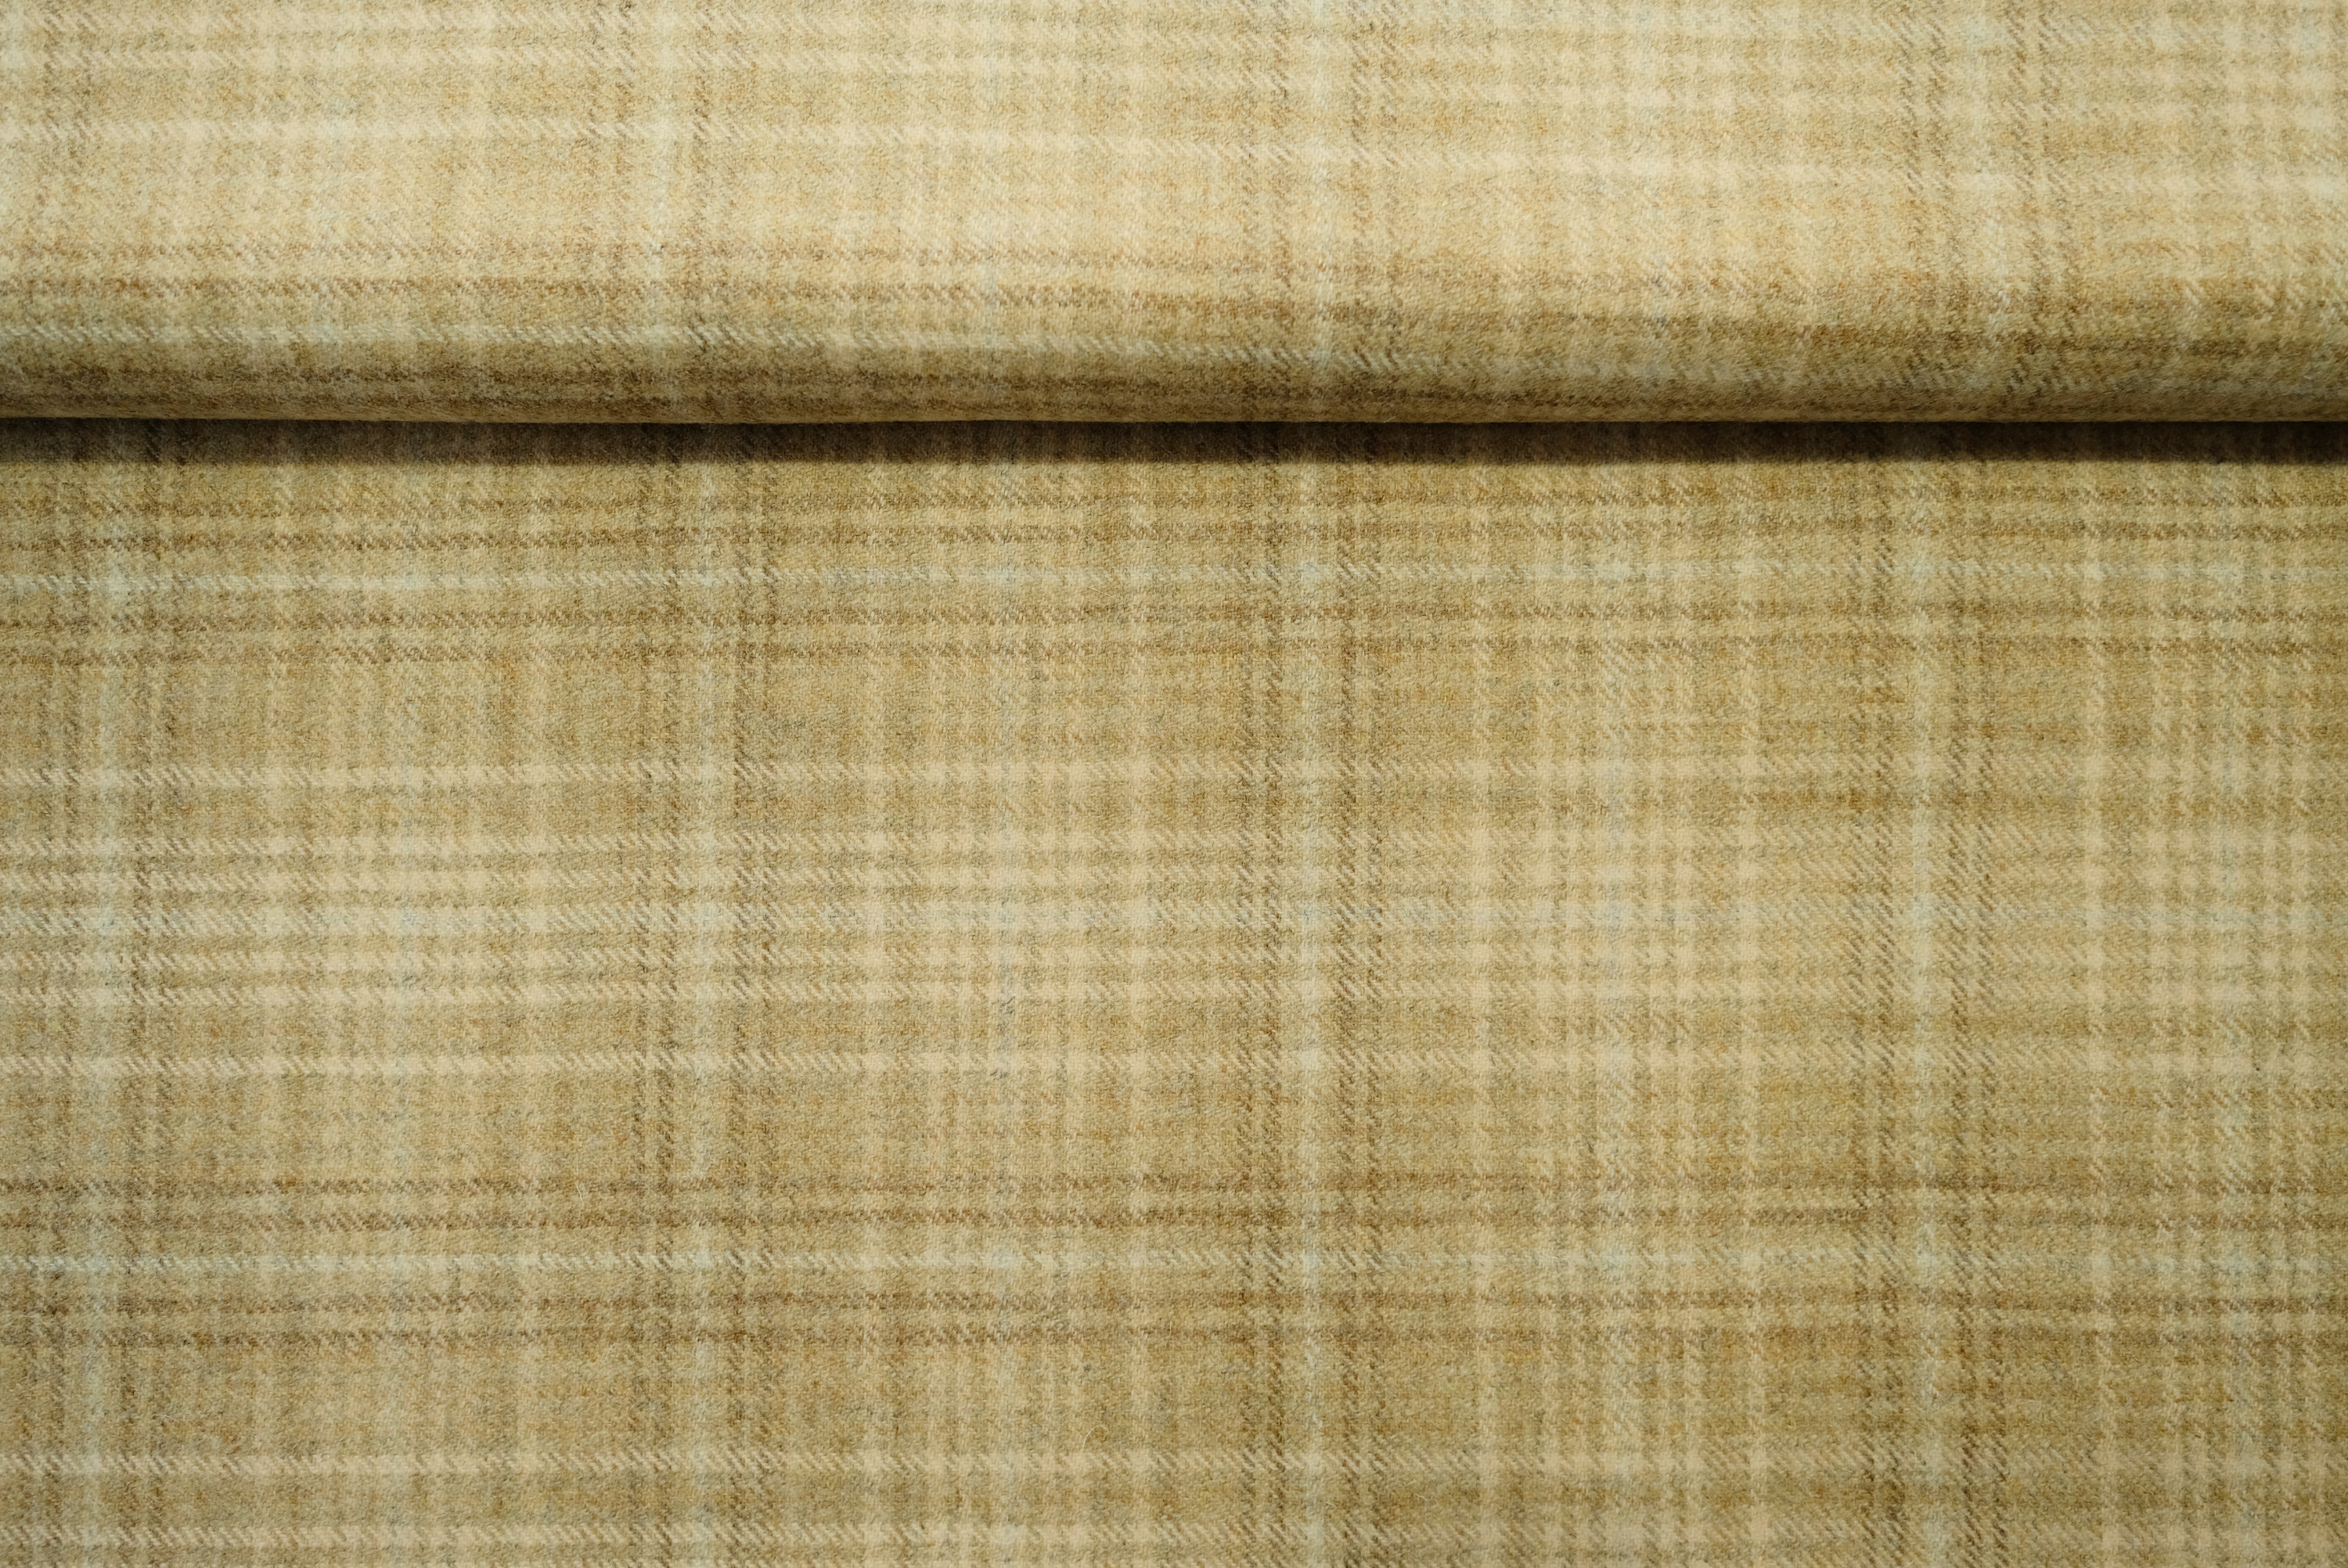 TWEED tartan wool fabric-beige 02